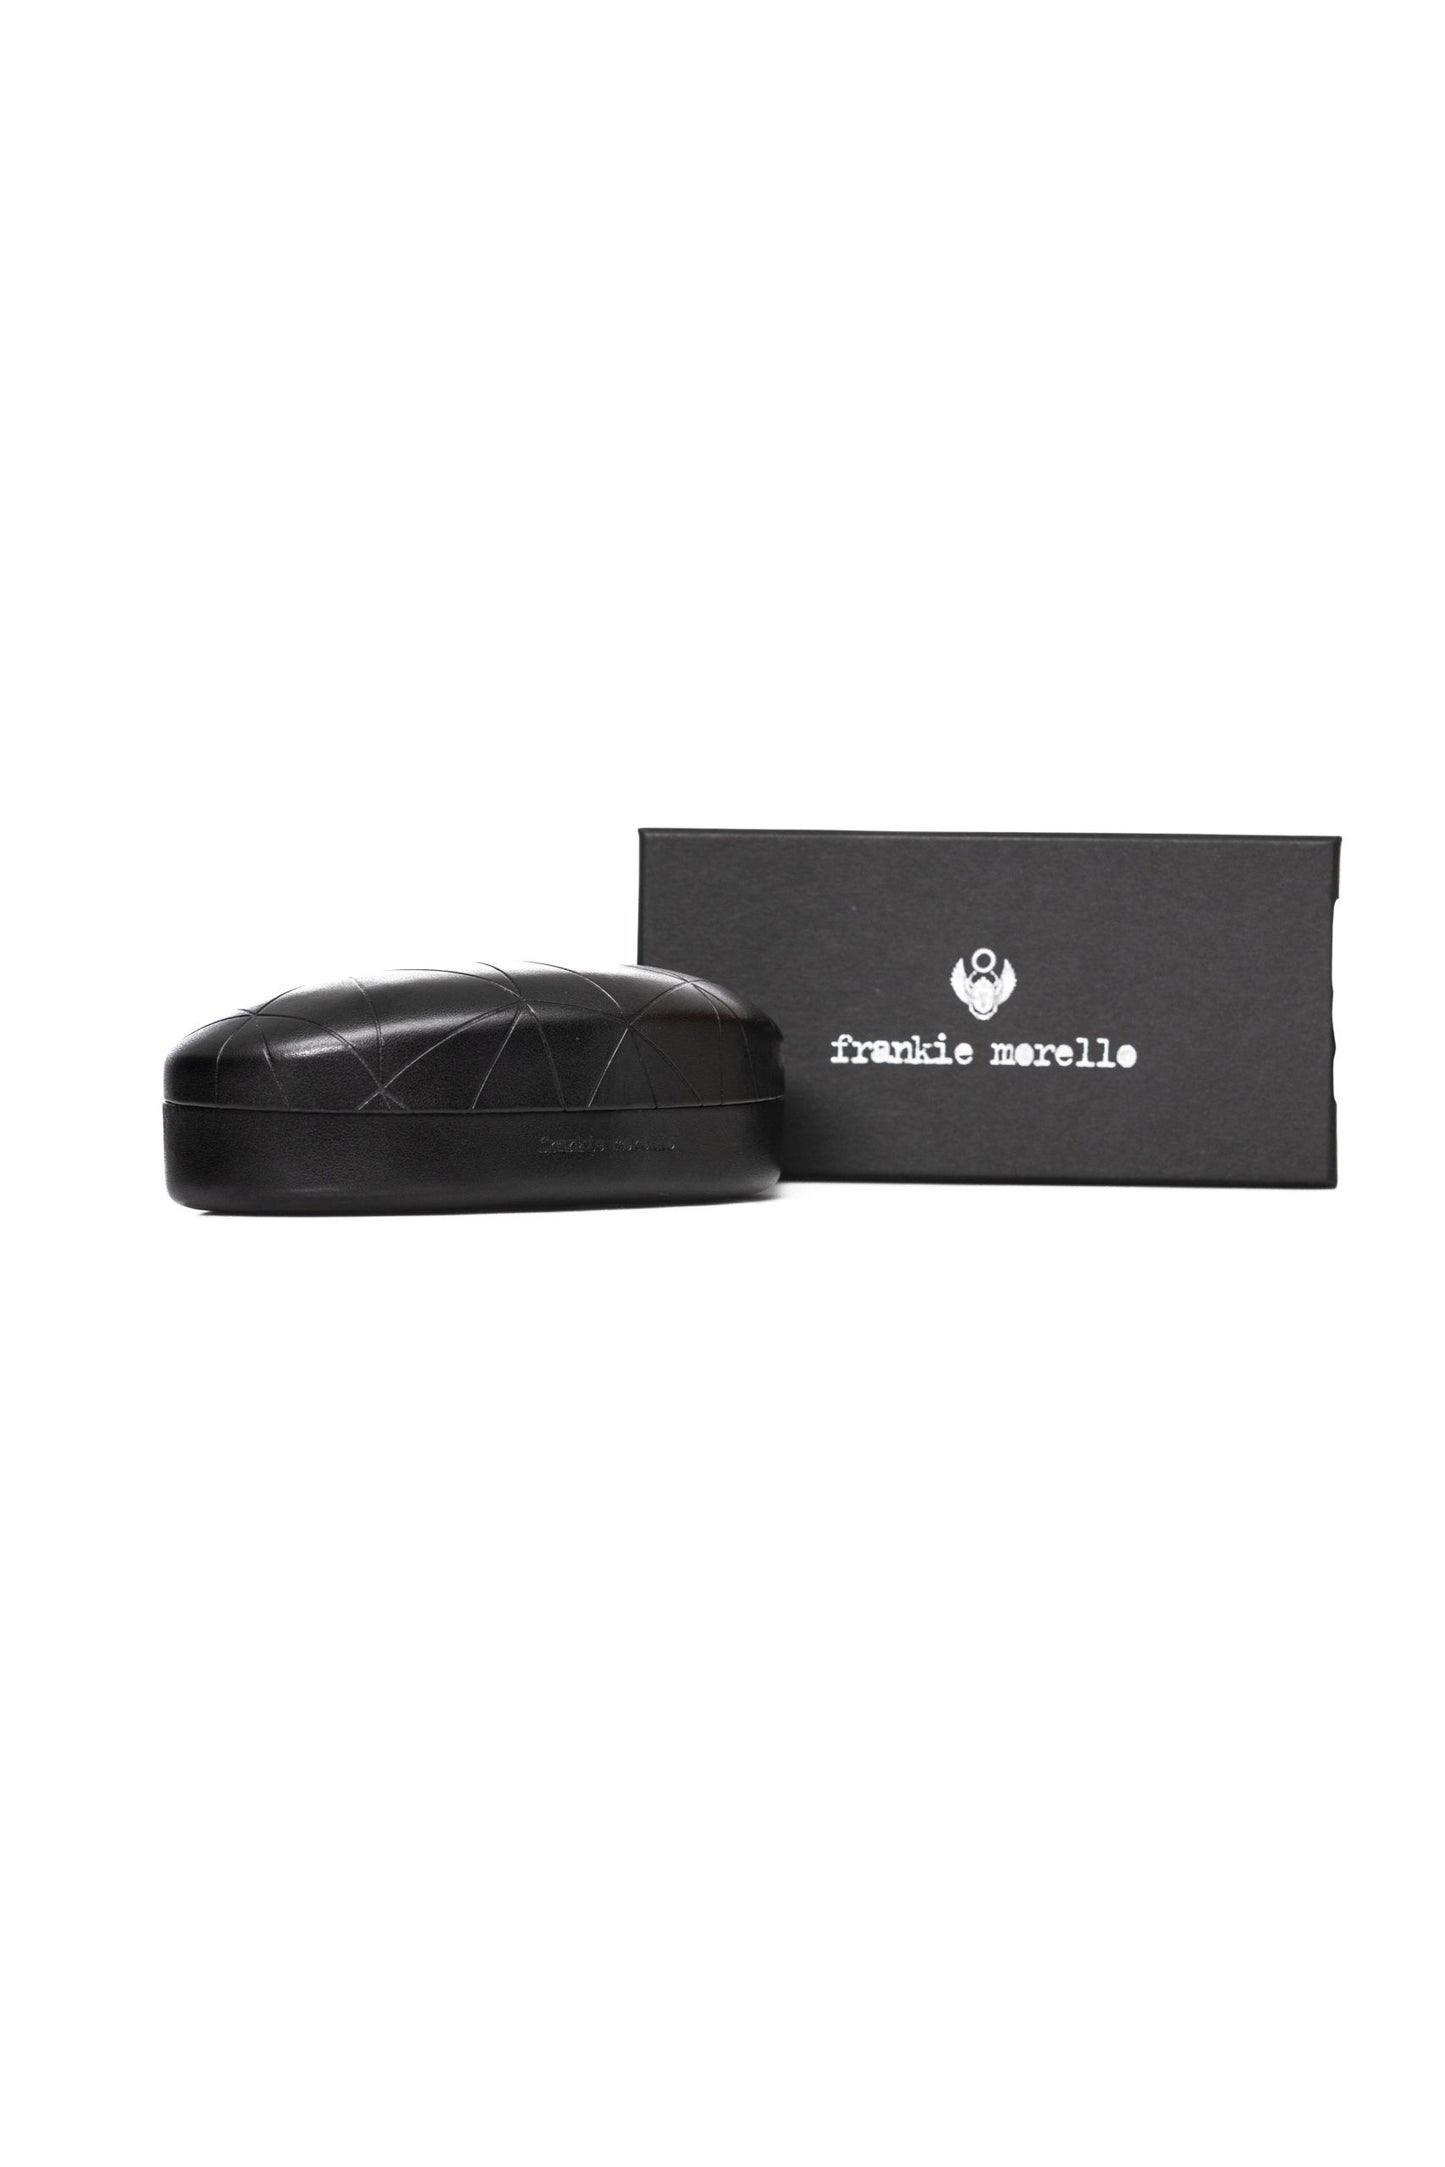 Frankie Morello Sleek Metallic Shield Sunglasses with Smoke Gray Lens